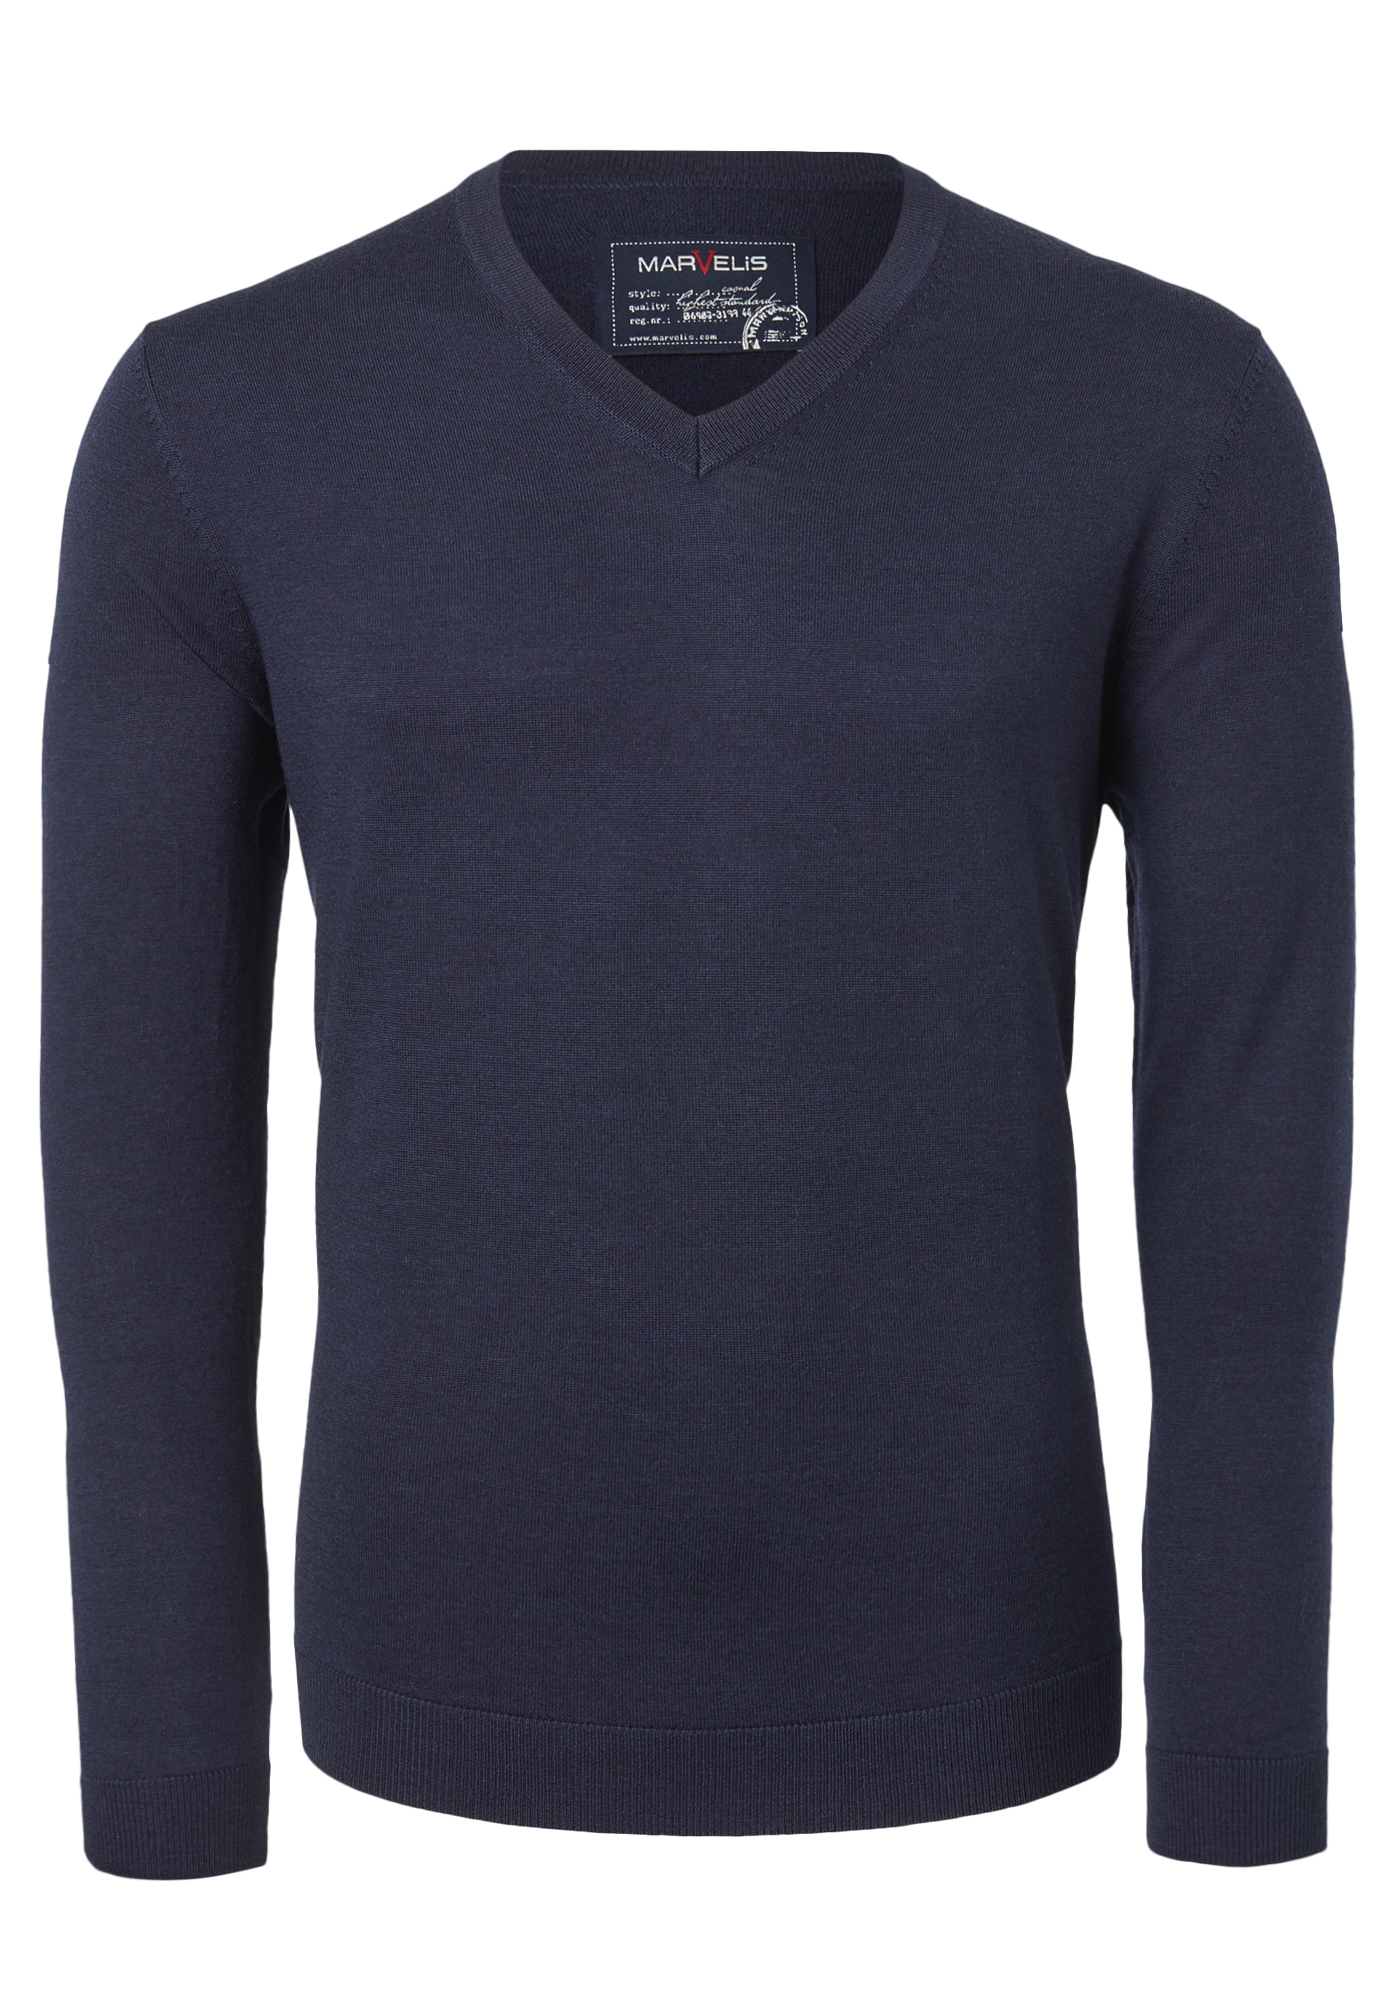 Set Wollen trui blauw casual uitstraling Mode Sweaters Wollen truien 